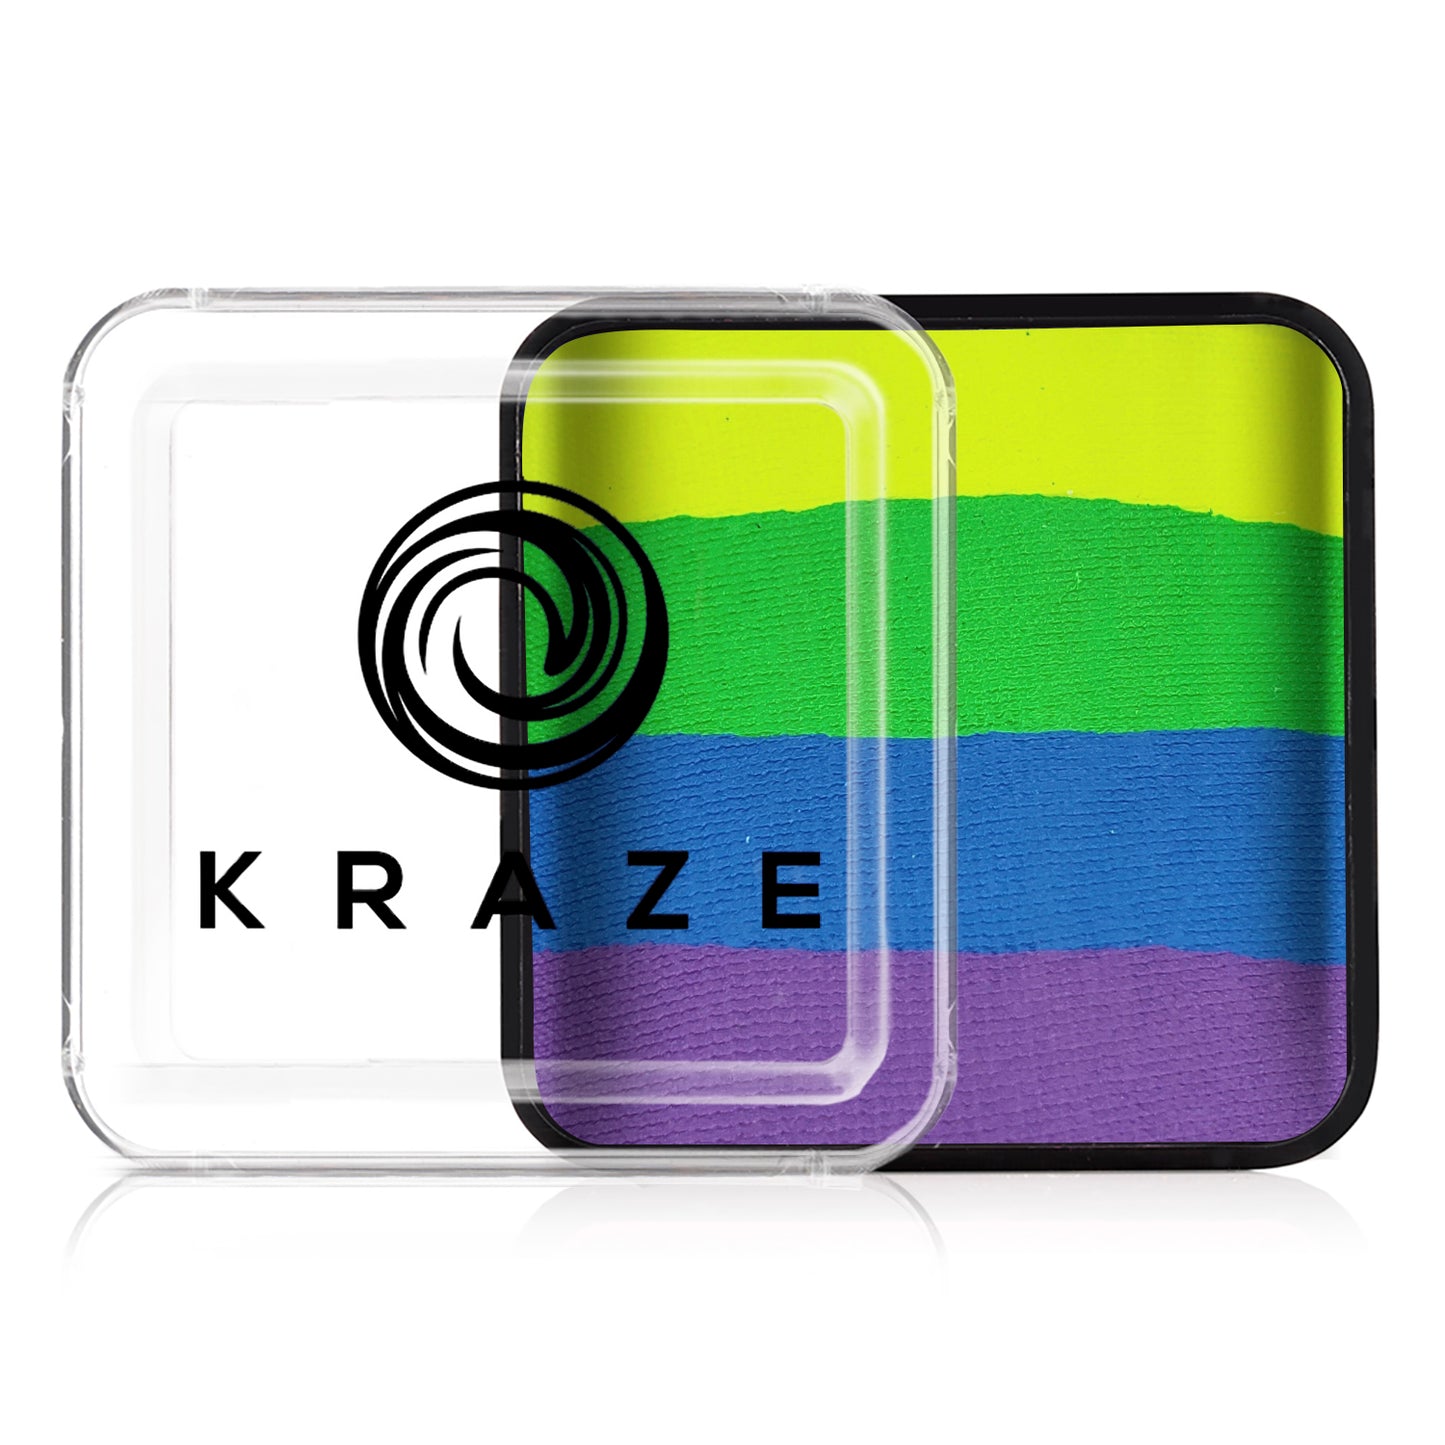 Kraze FX Dome Cake - Thrill (25 gm)